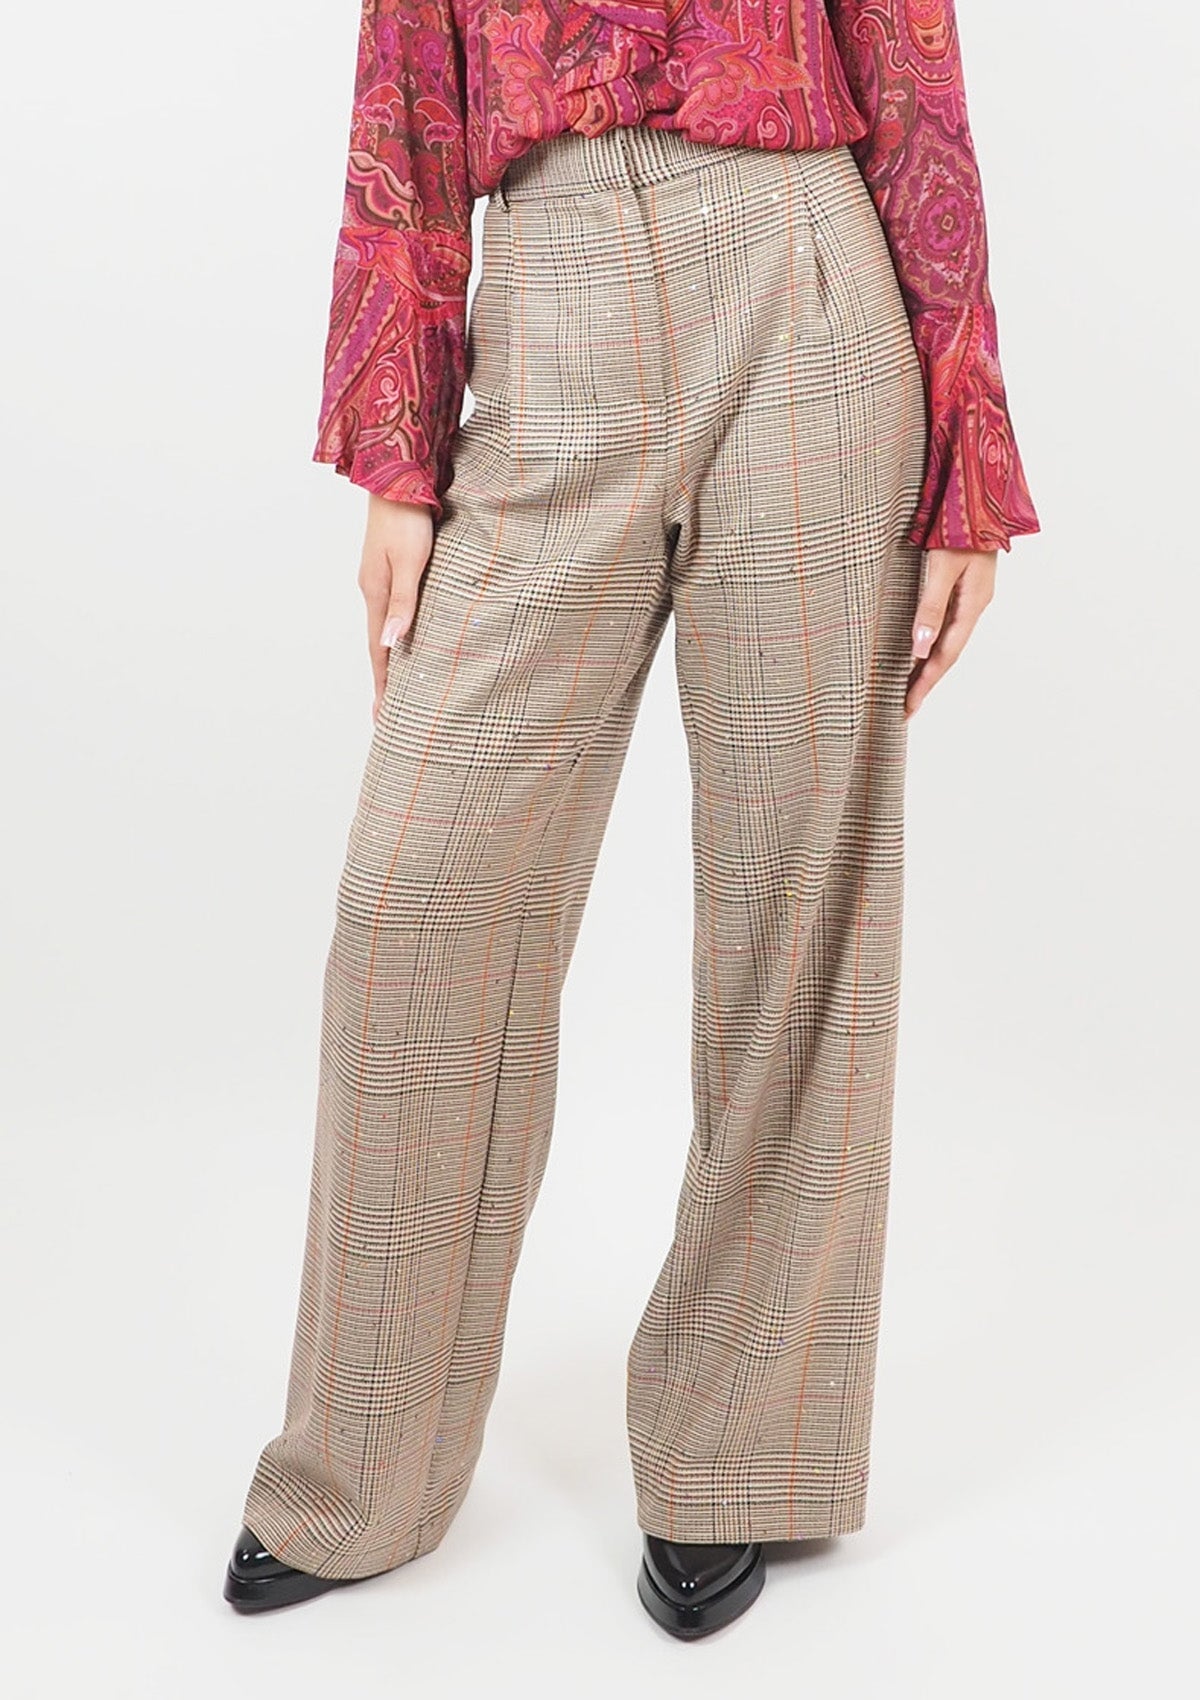 Damen Oversize-Hose aus Polyester mit Karomuster in Beige & Pink - Pantalone Damen Hose SHIRTAPORTER 